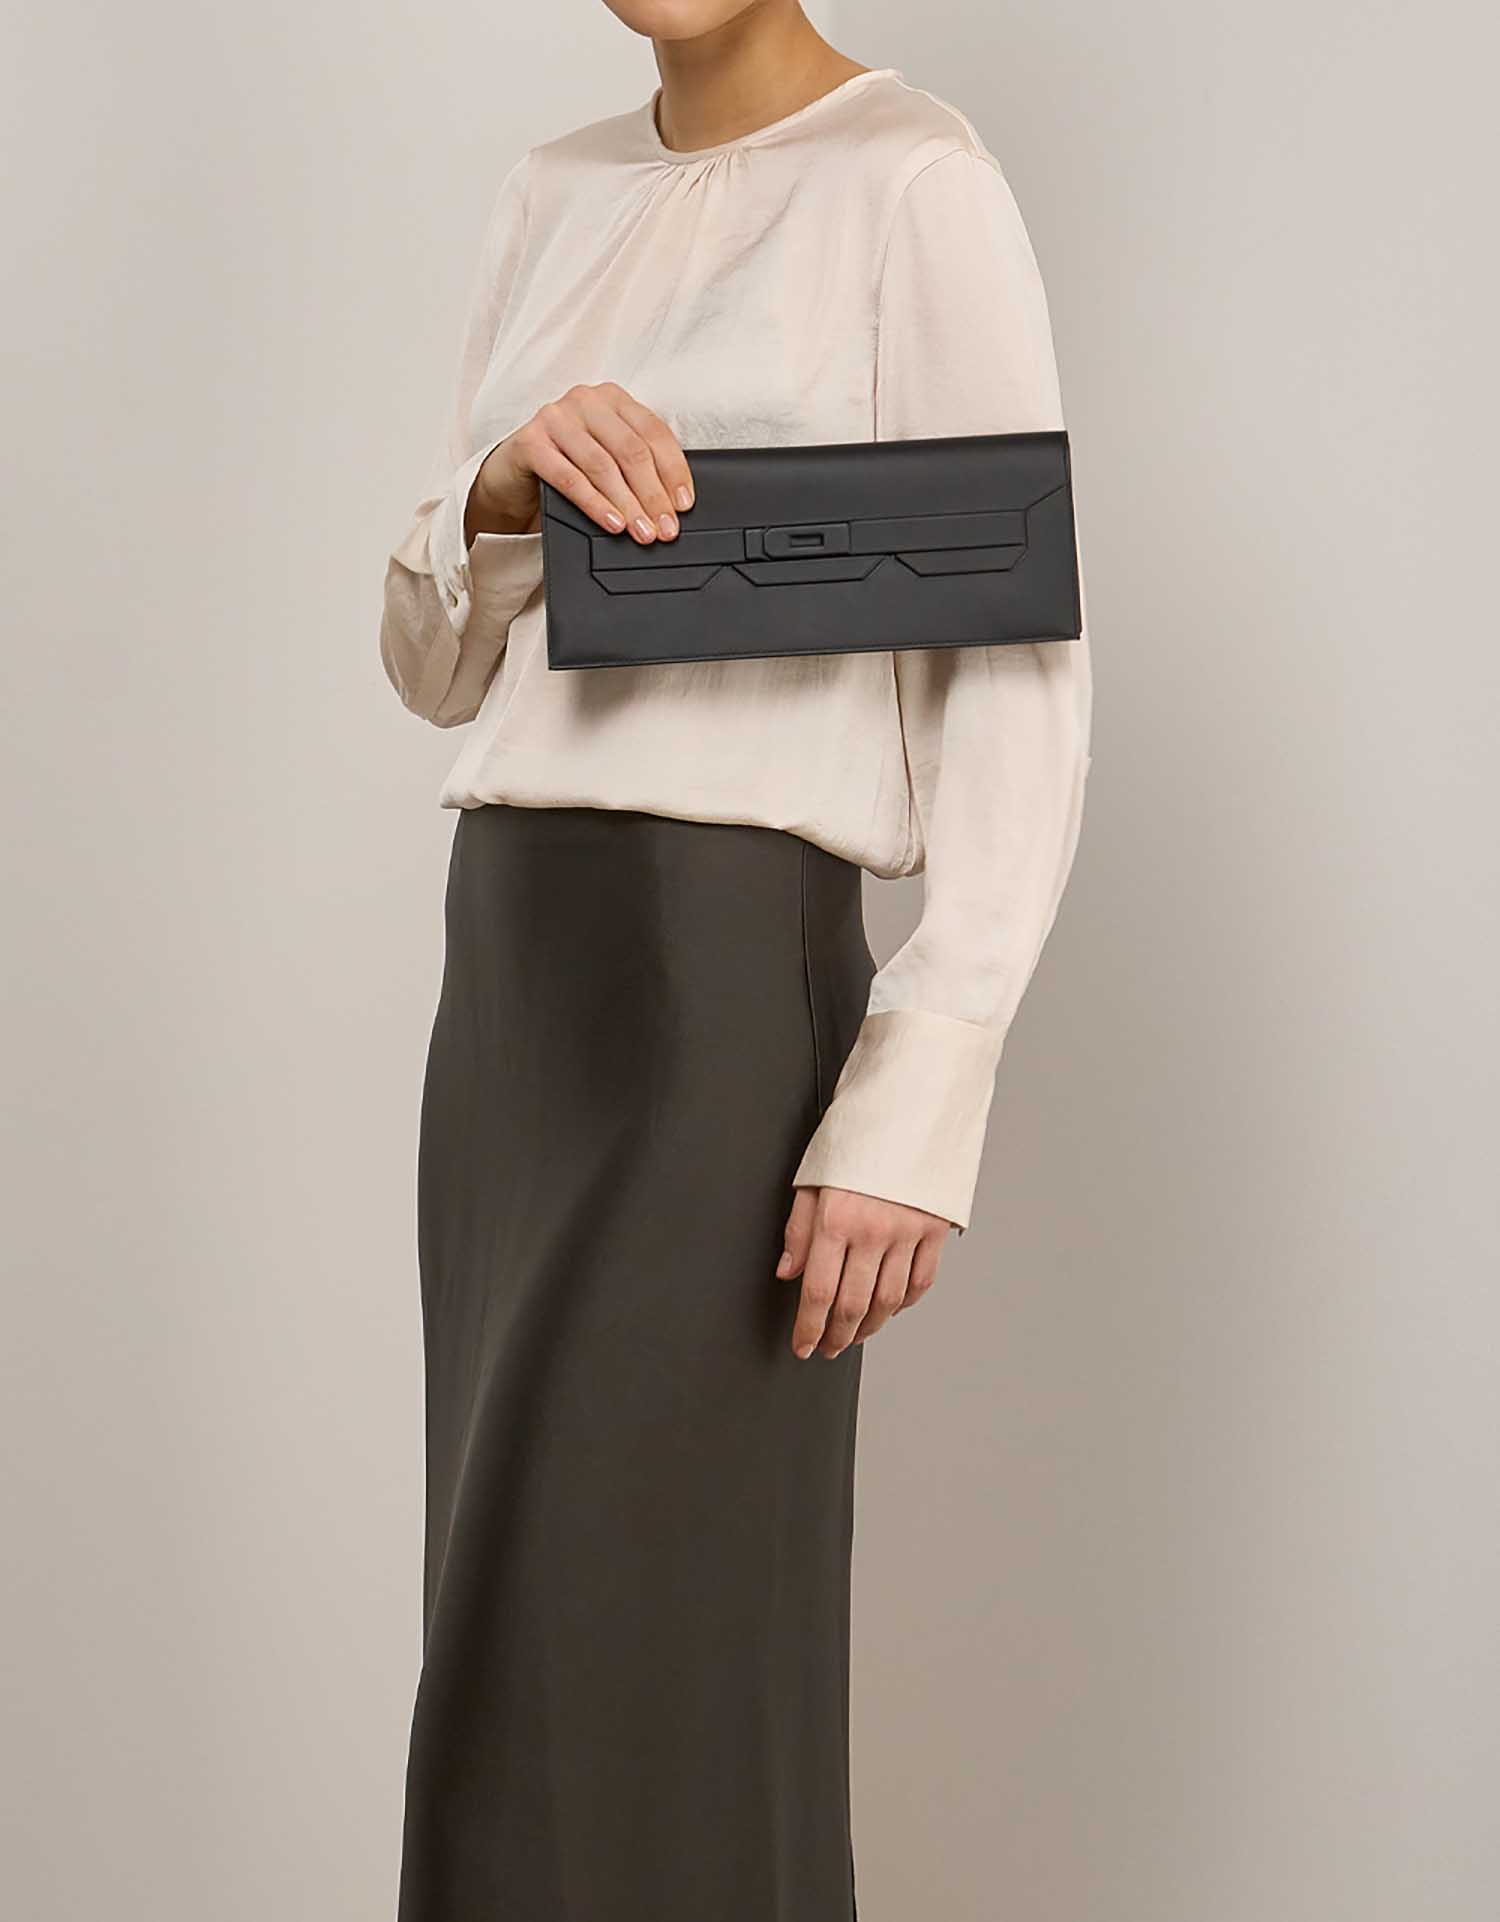 Hermès BirkinShadow Clutch Black on Model | Sell your designer bag on Saclab.com